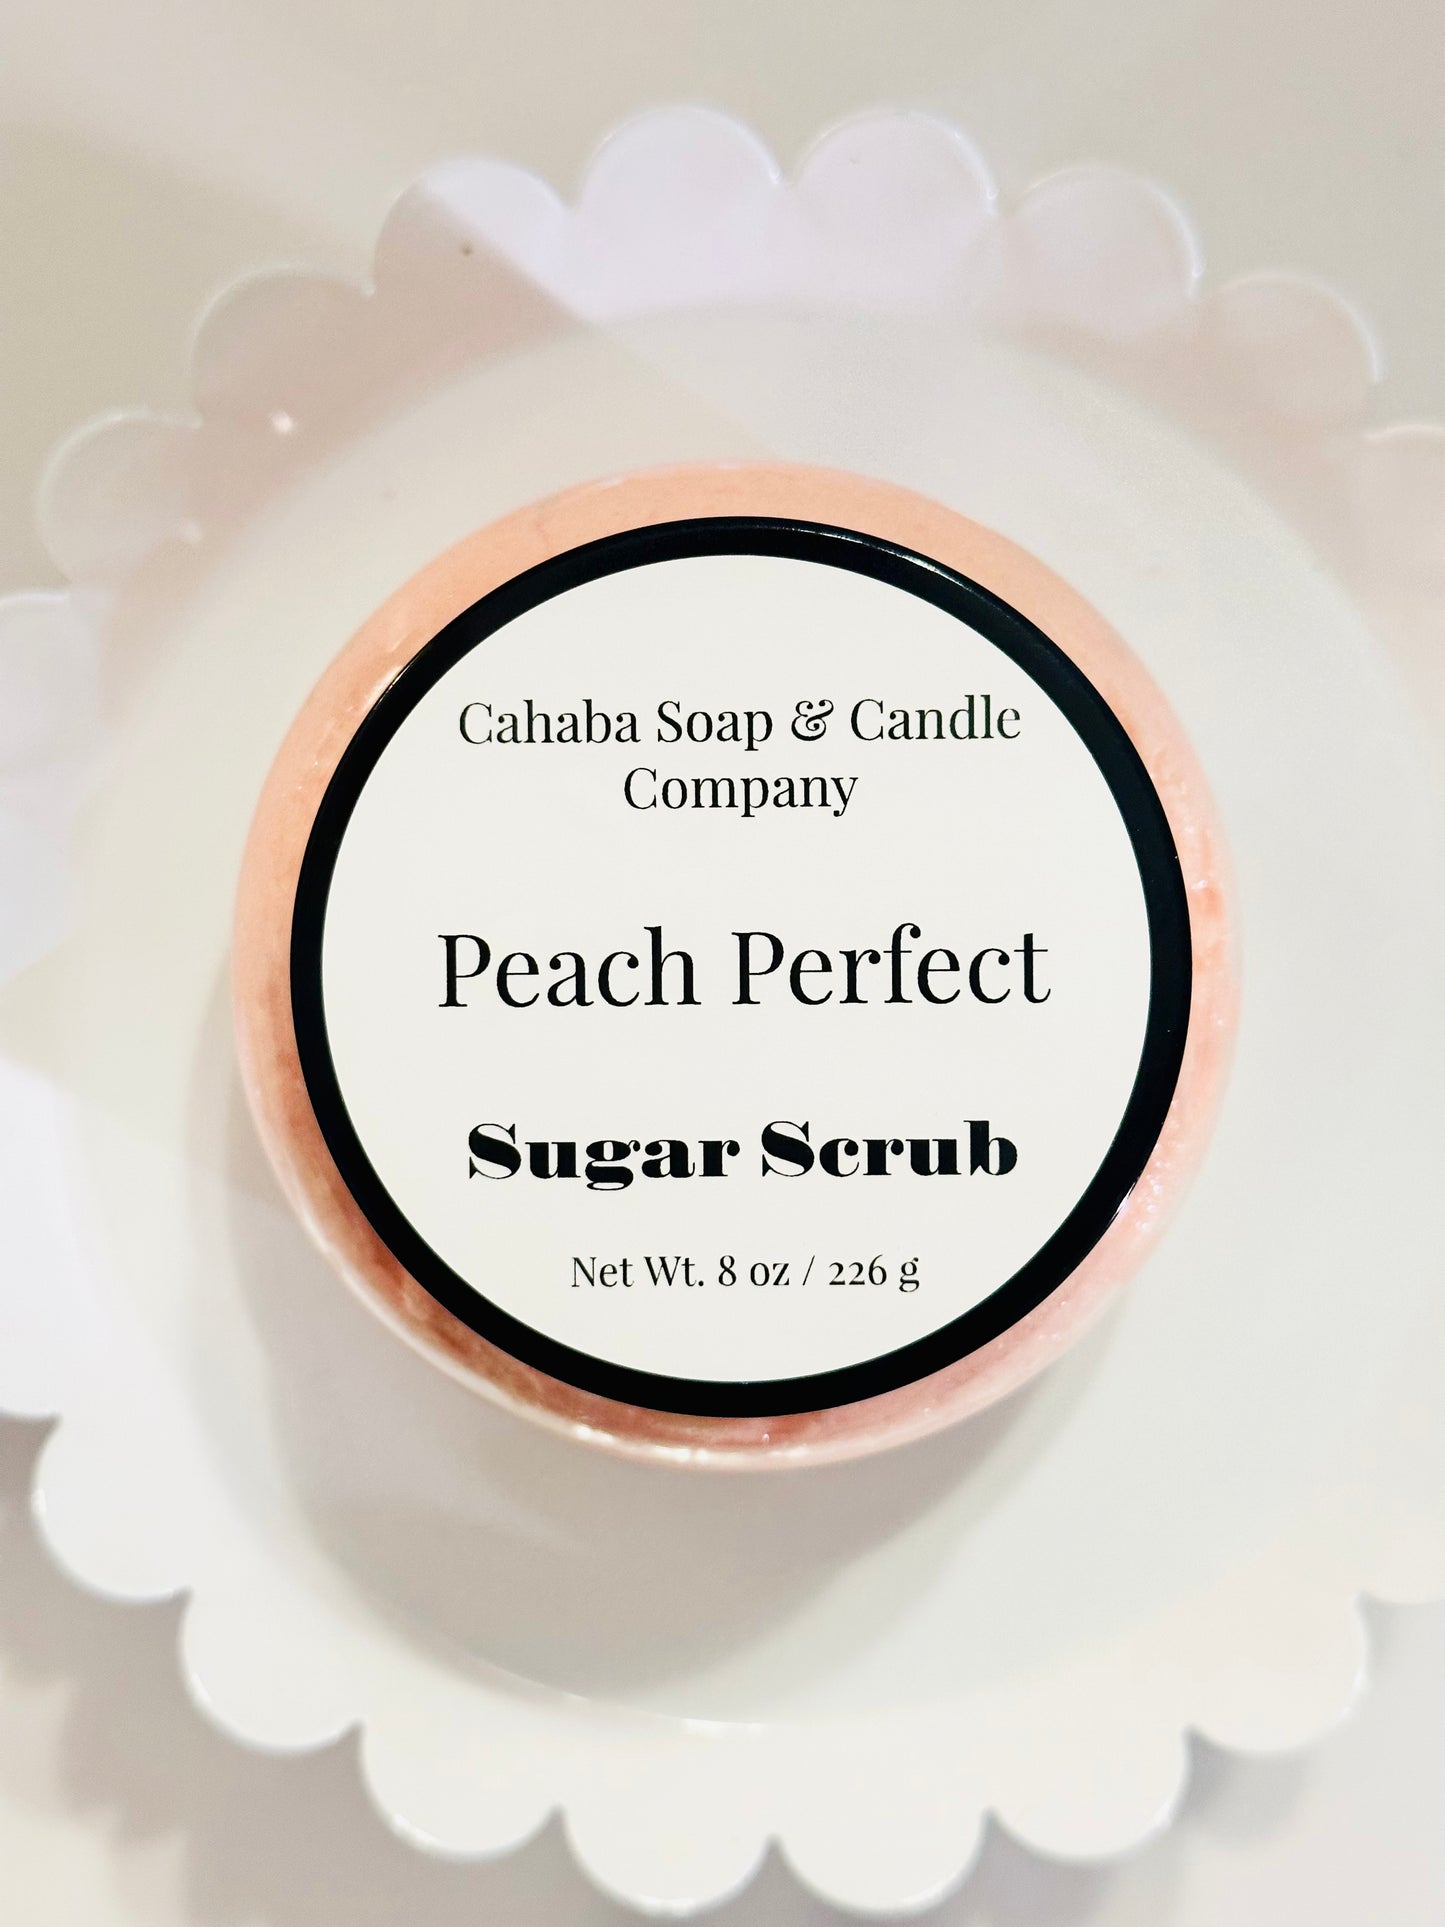 Peach Perfect Sugar Scrubs - Cahaba Soap and Candle Company